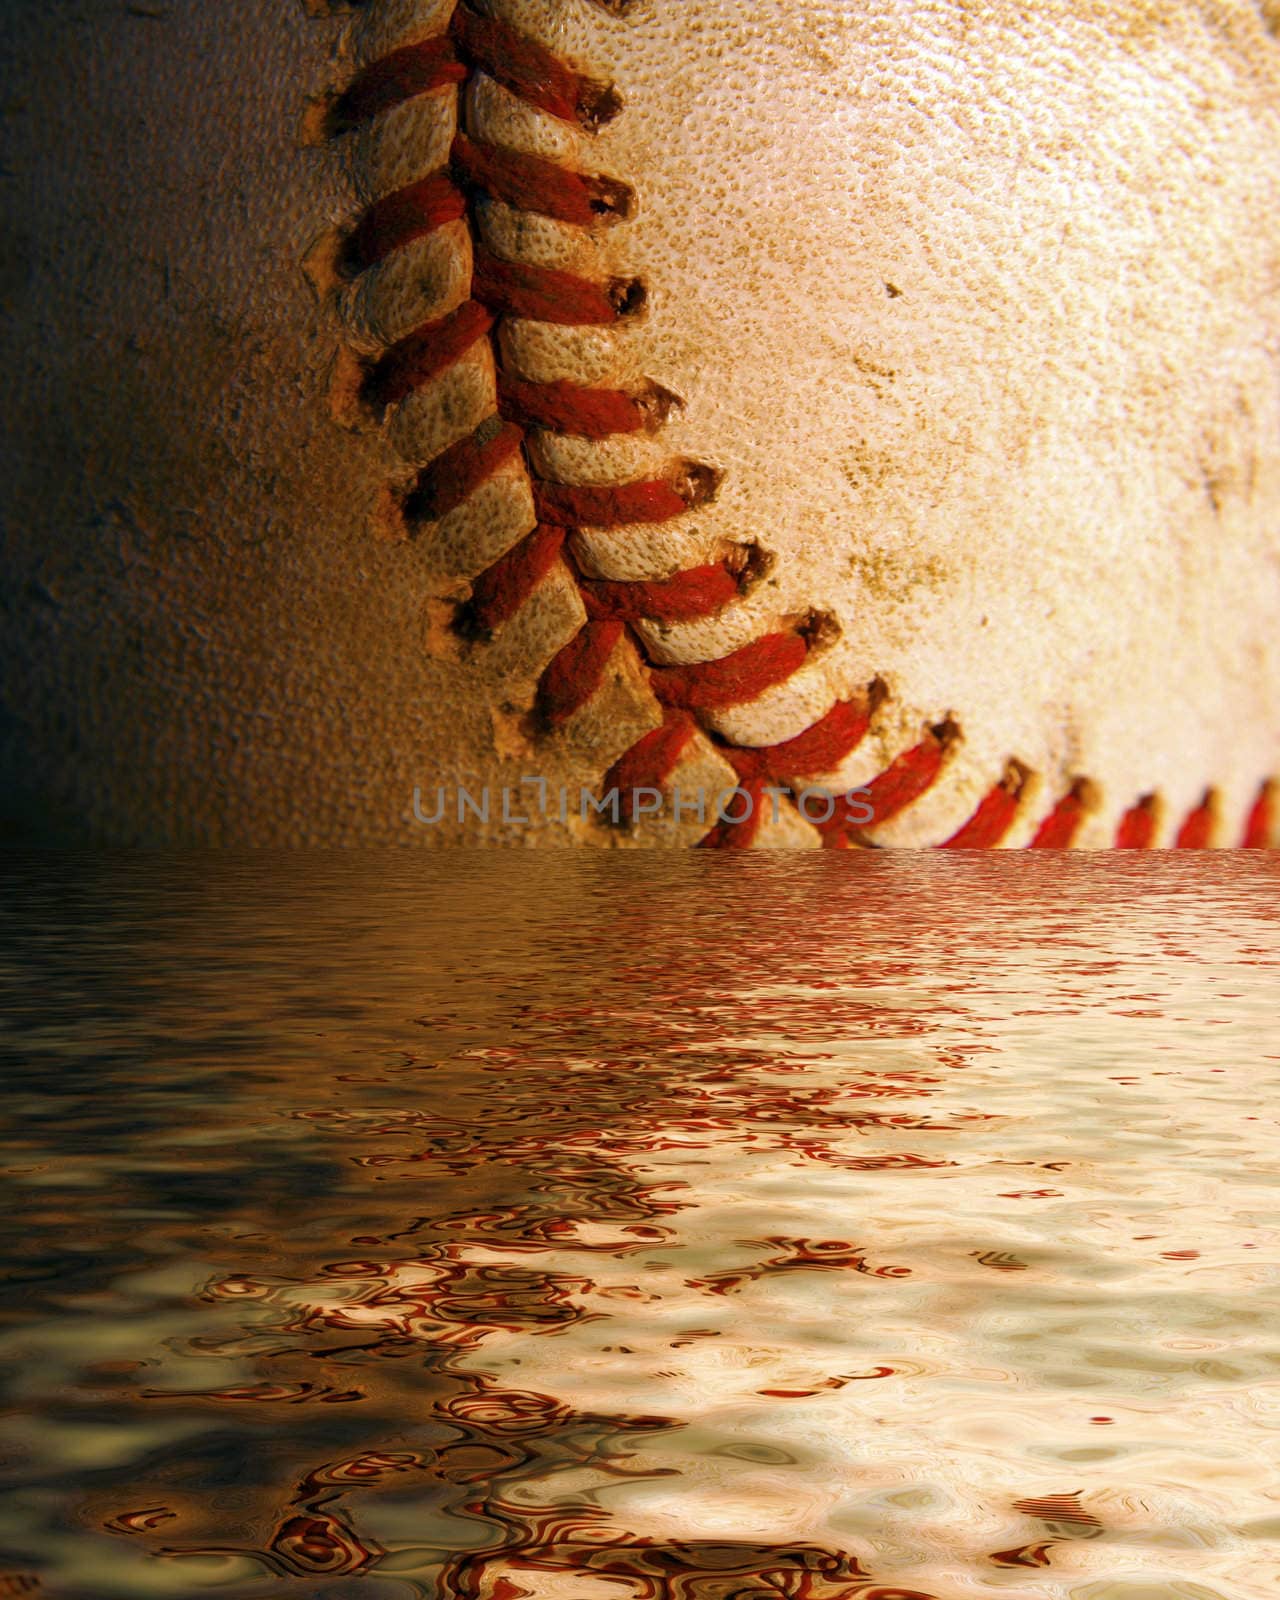 Baseball reflected by mahnken